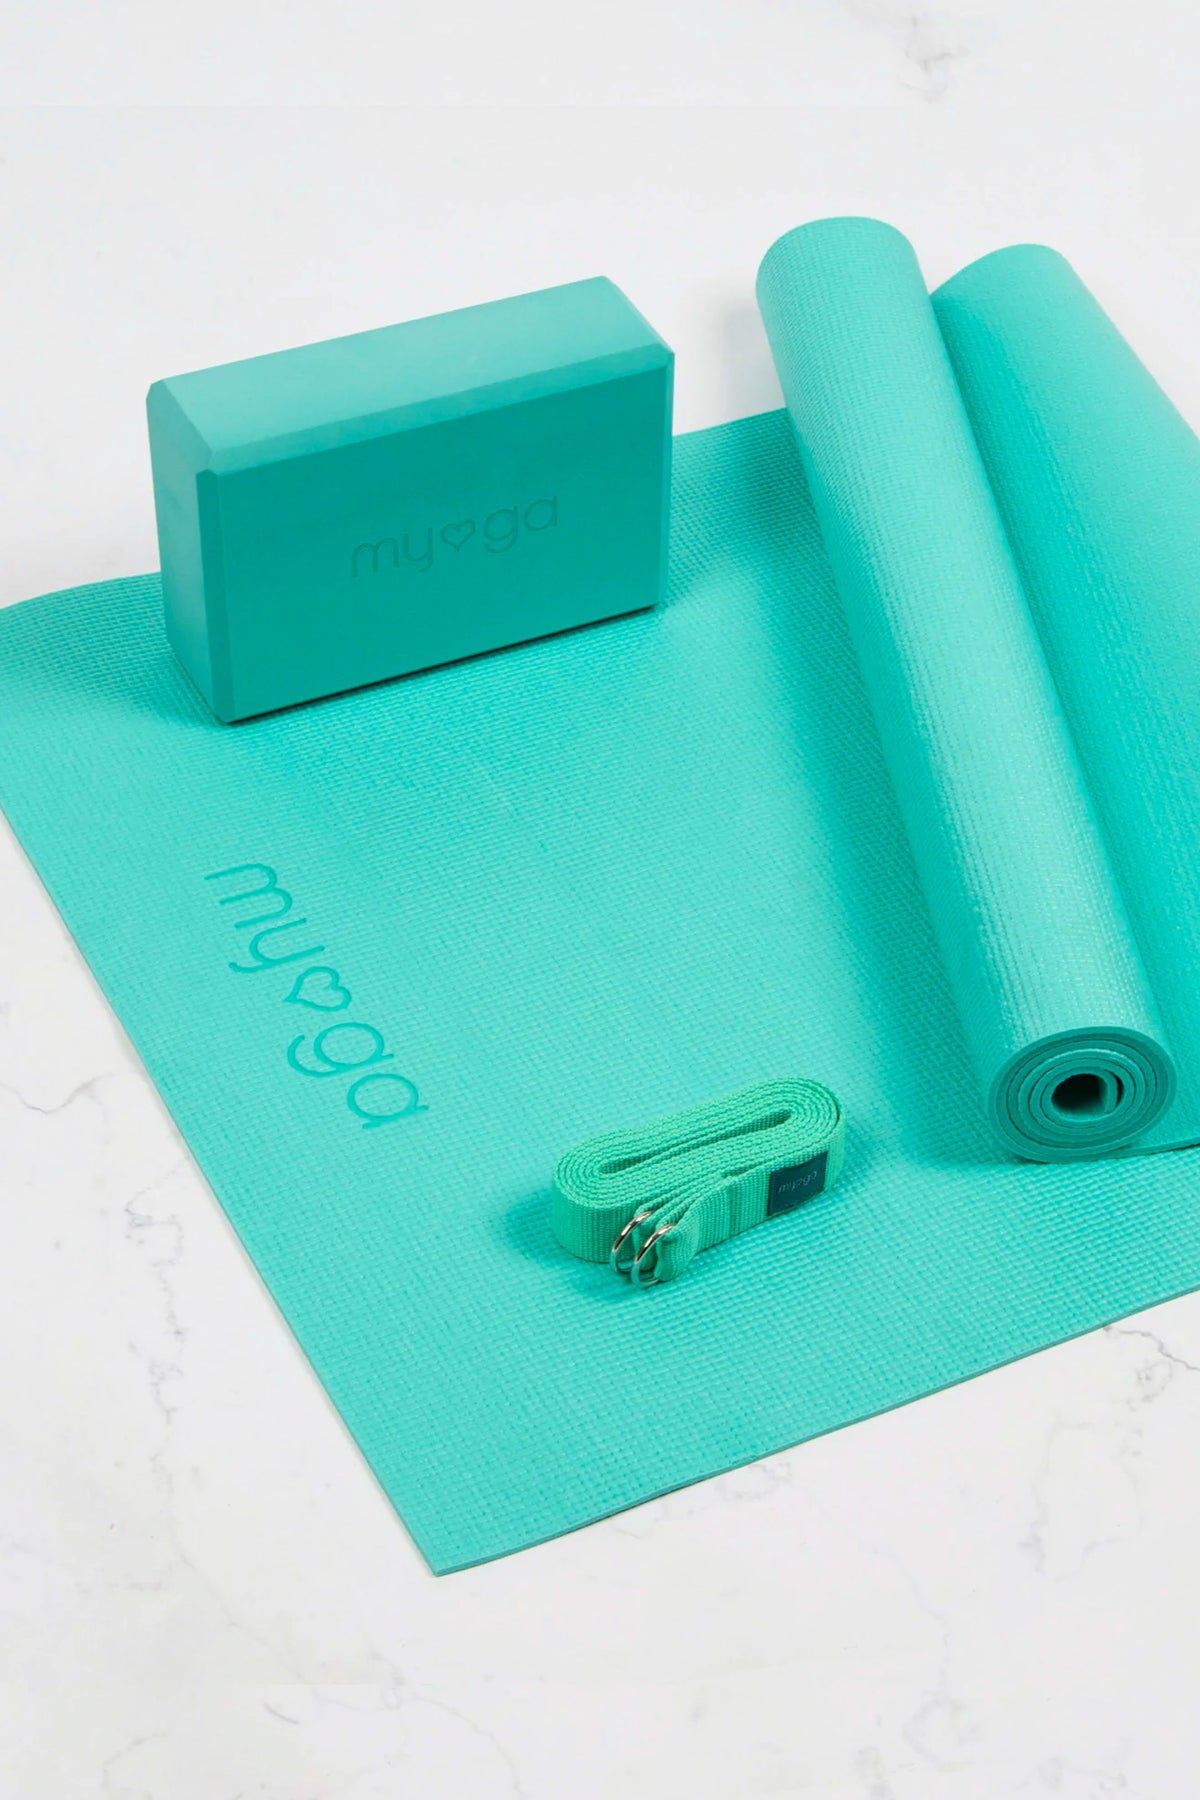 Myga Yoga Starter Kit Mat Block Carry Strap 4mm Thick Pilates